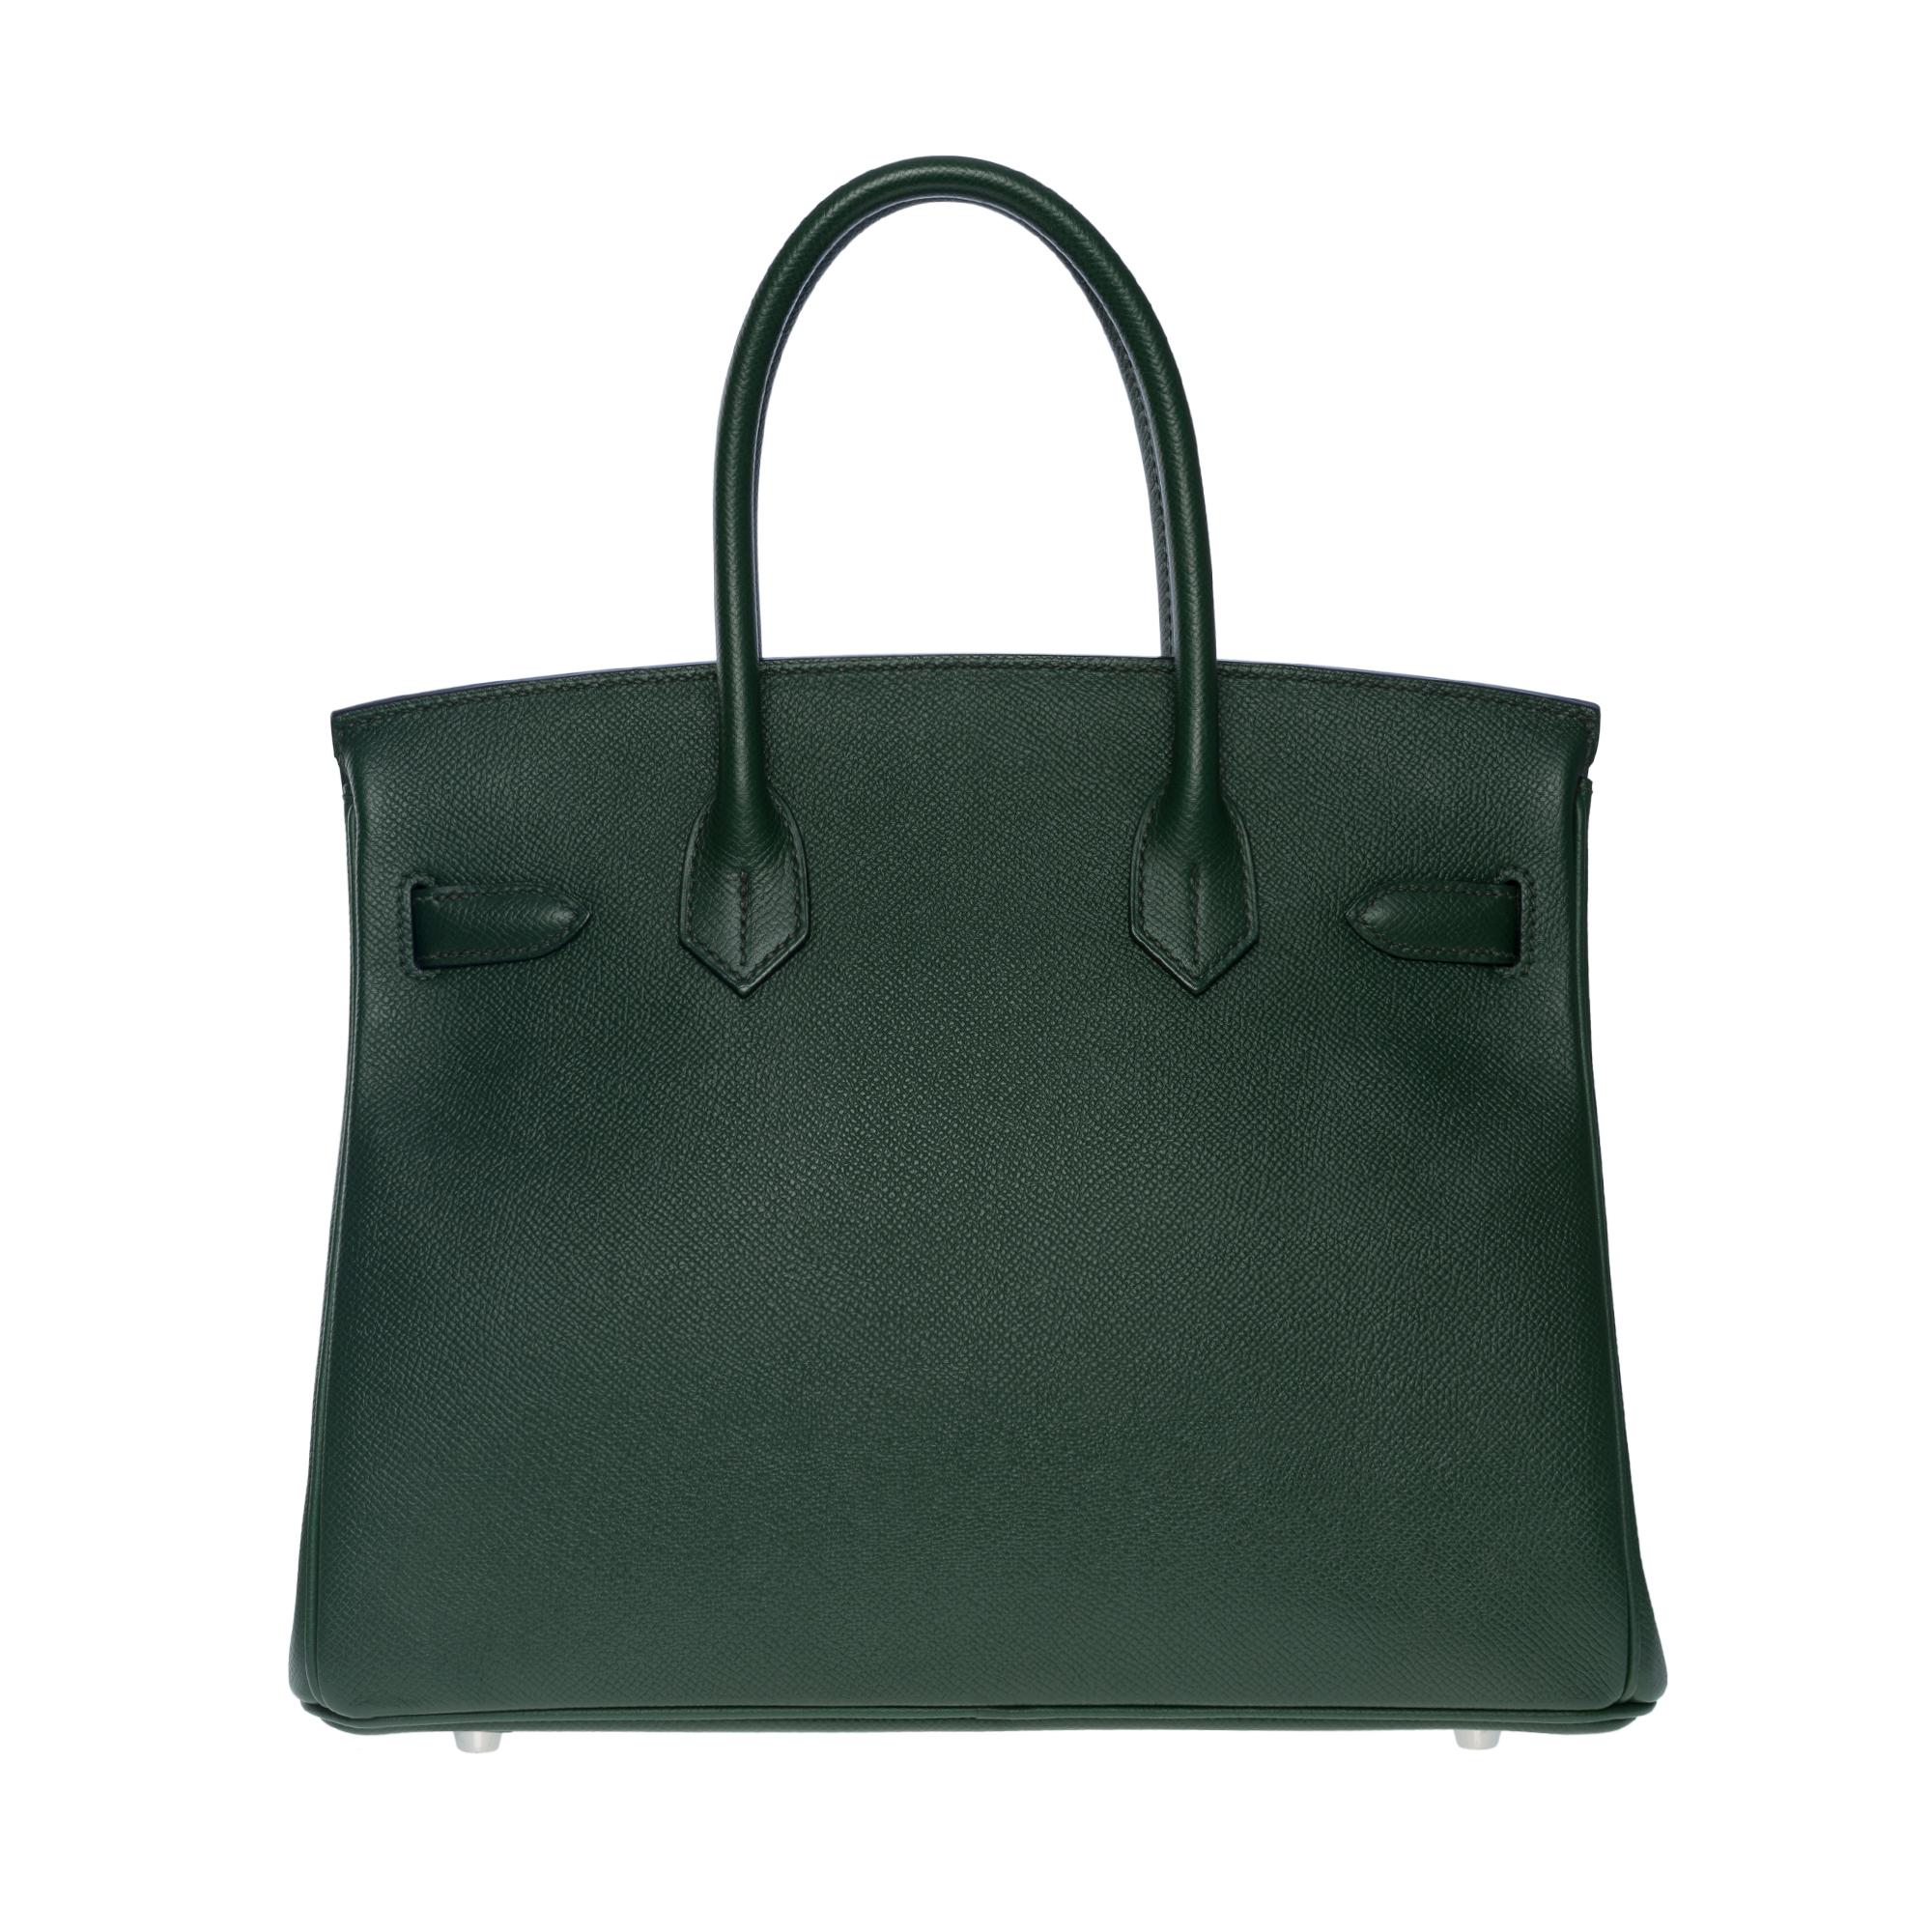 Orange Amazing & Rare Hermès Birkin 30 handbag in Vert Anglais Epsom leather, SHW